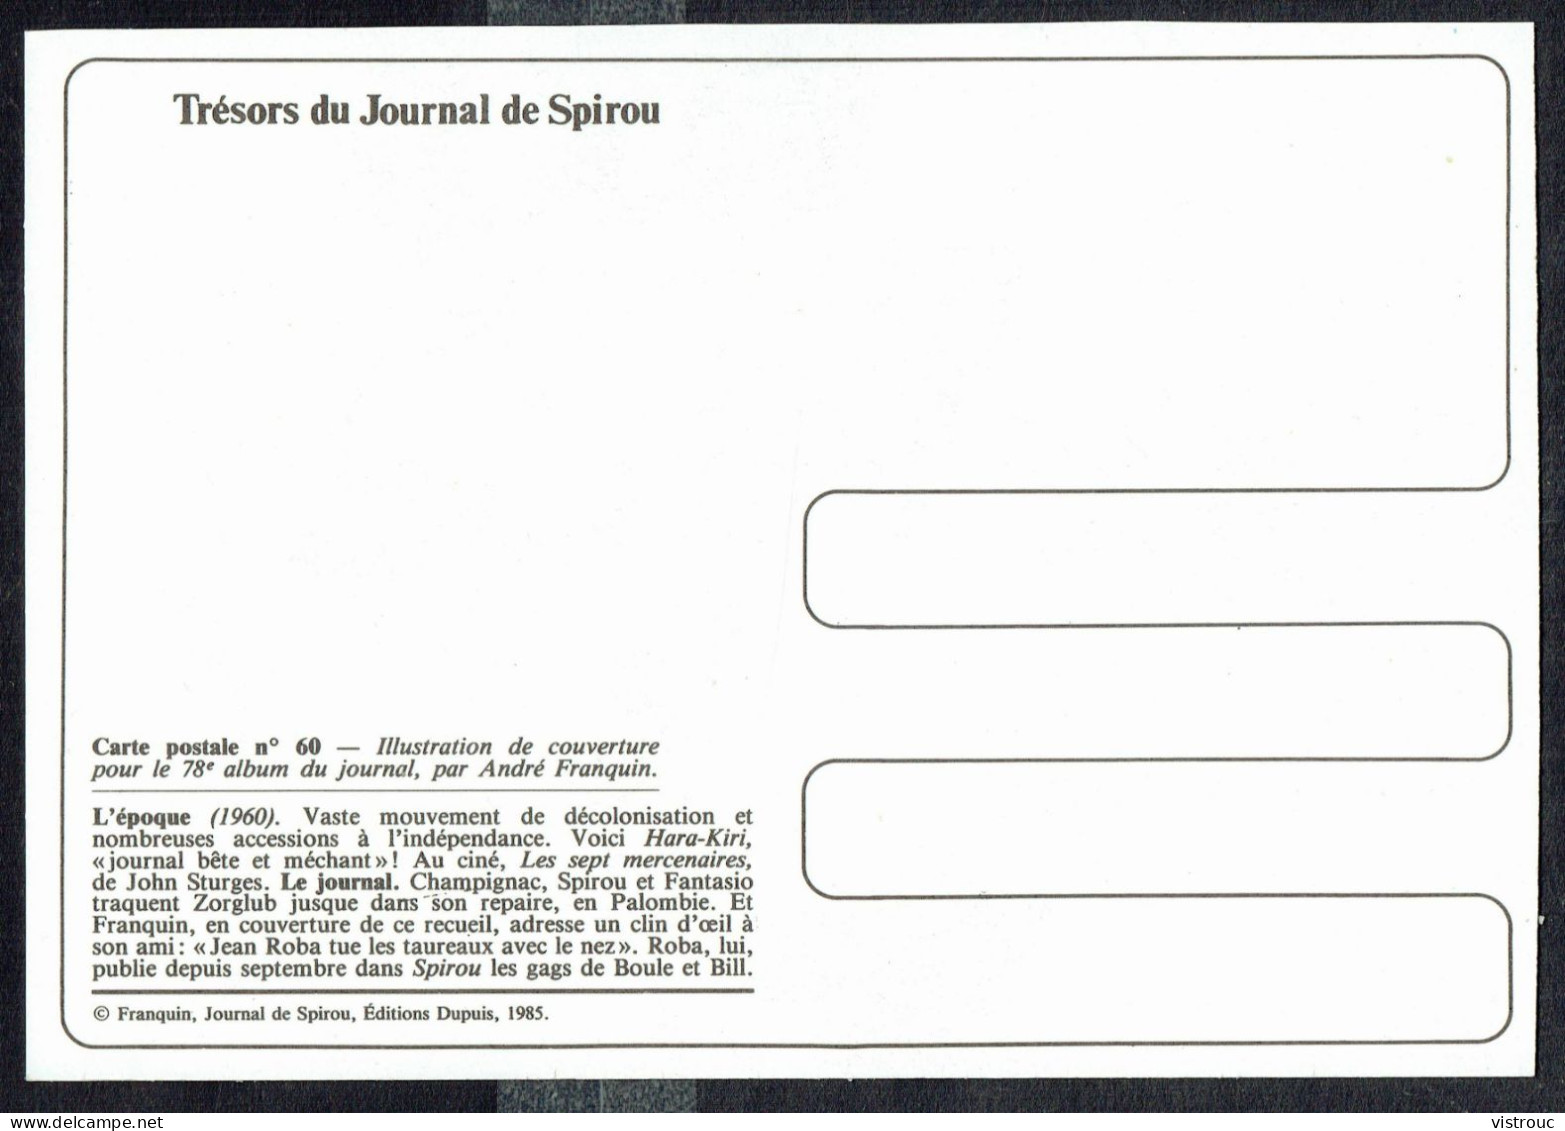 SPIROU - CP N° 60 : Illustration Couverture Album N° 78 De FRANQUIN - Non Circulé - Not Circulated - Ed. DUPUIS - 1985. - Comics